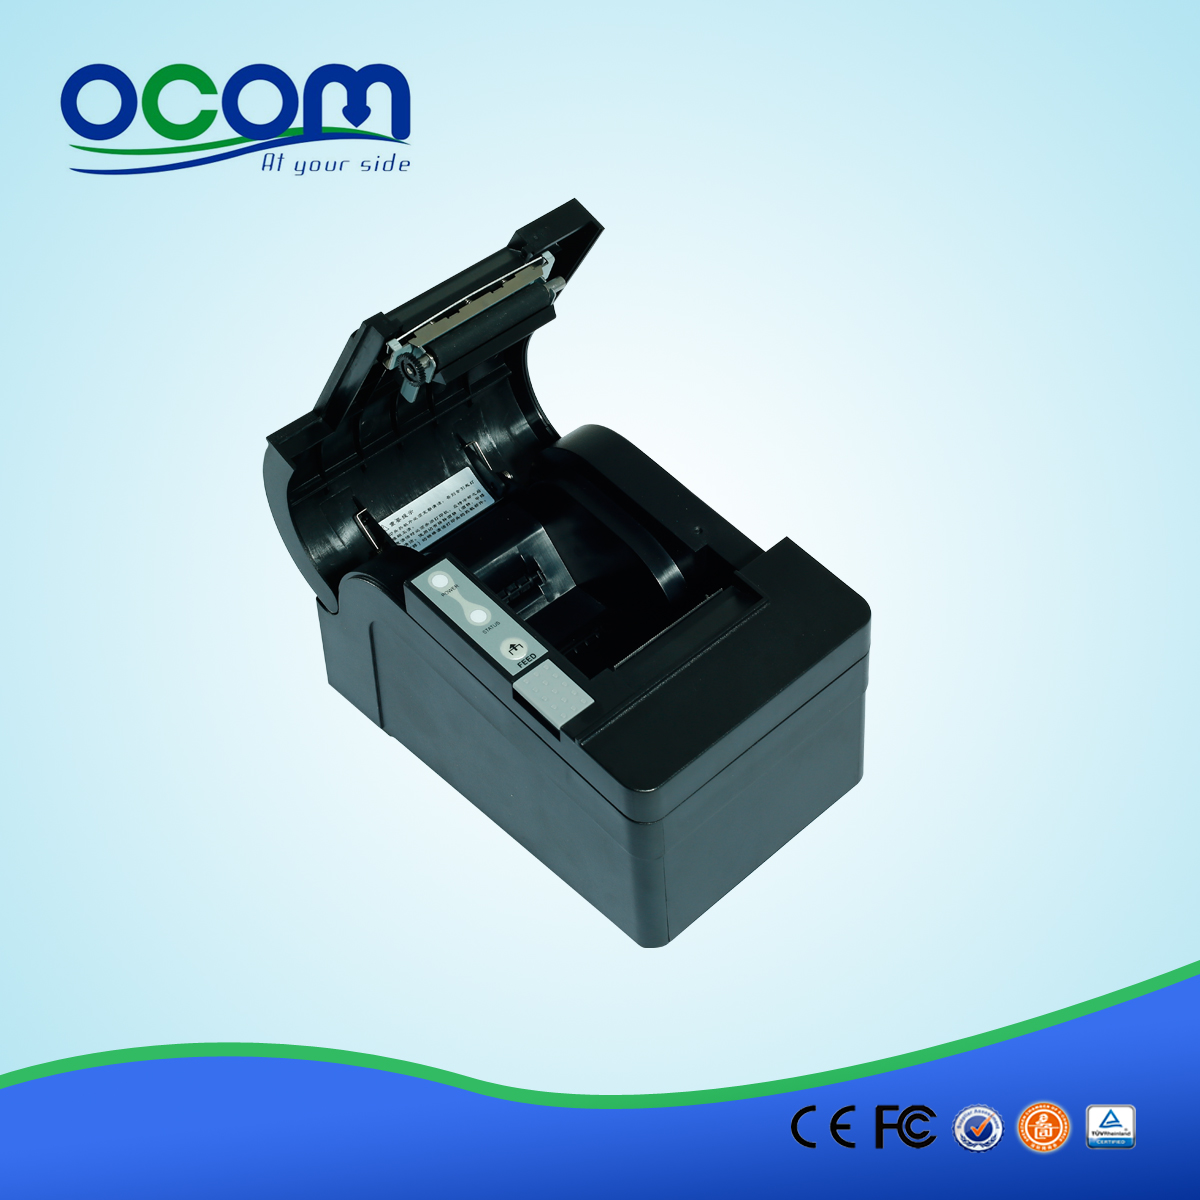 58mm android autosnijder thermische ontvangst printer-- OCPP-58C